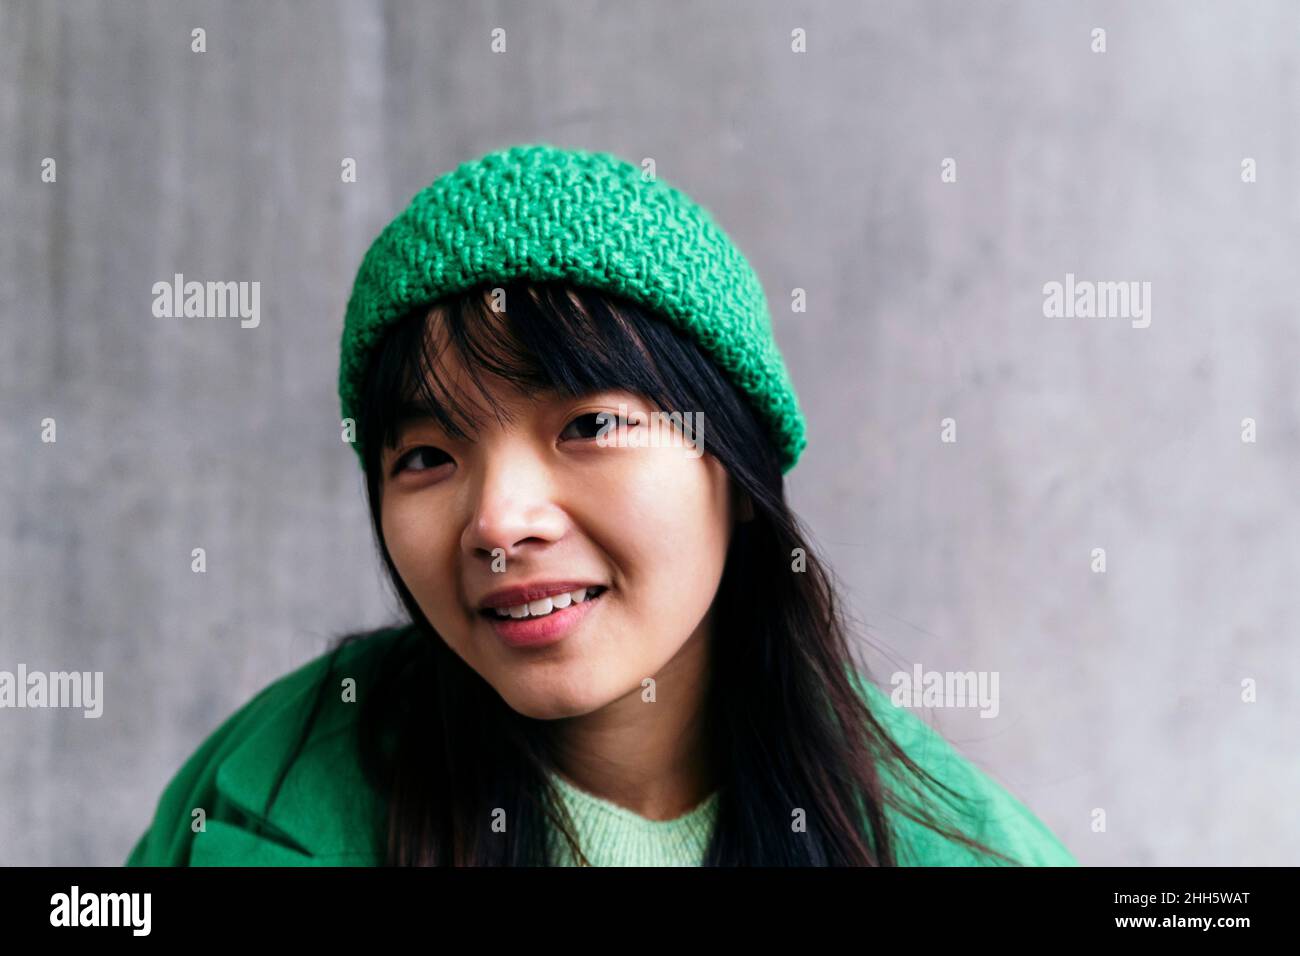 Smiling woman wearing green knit hat Stock Photo